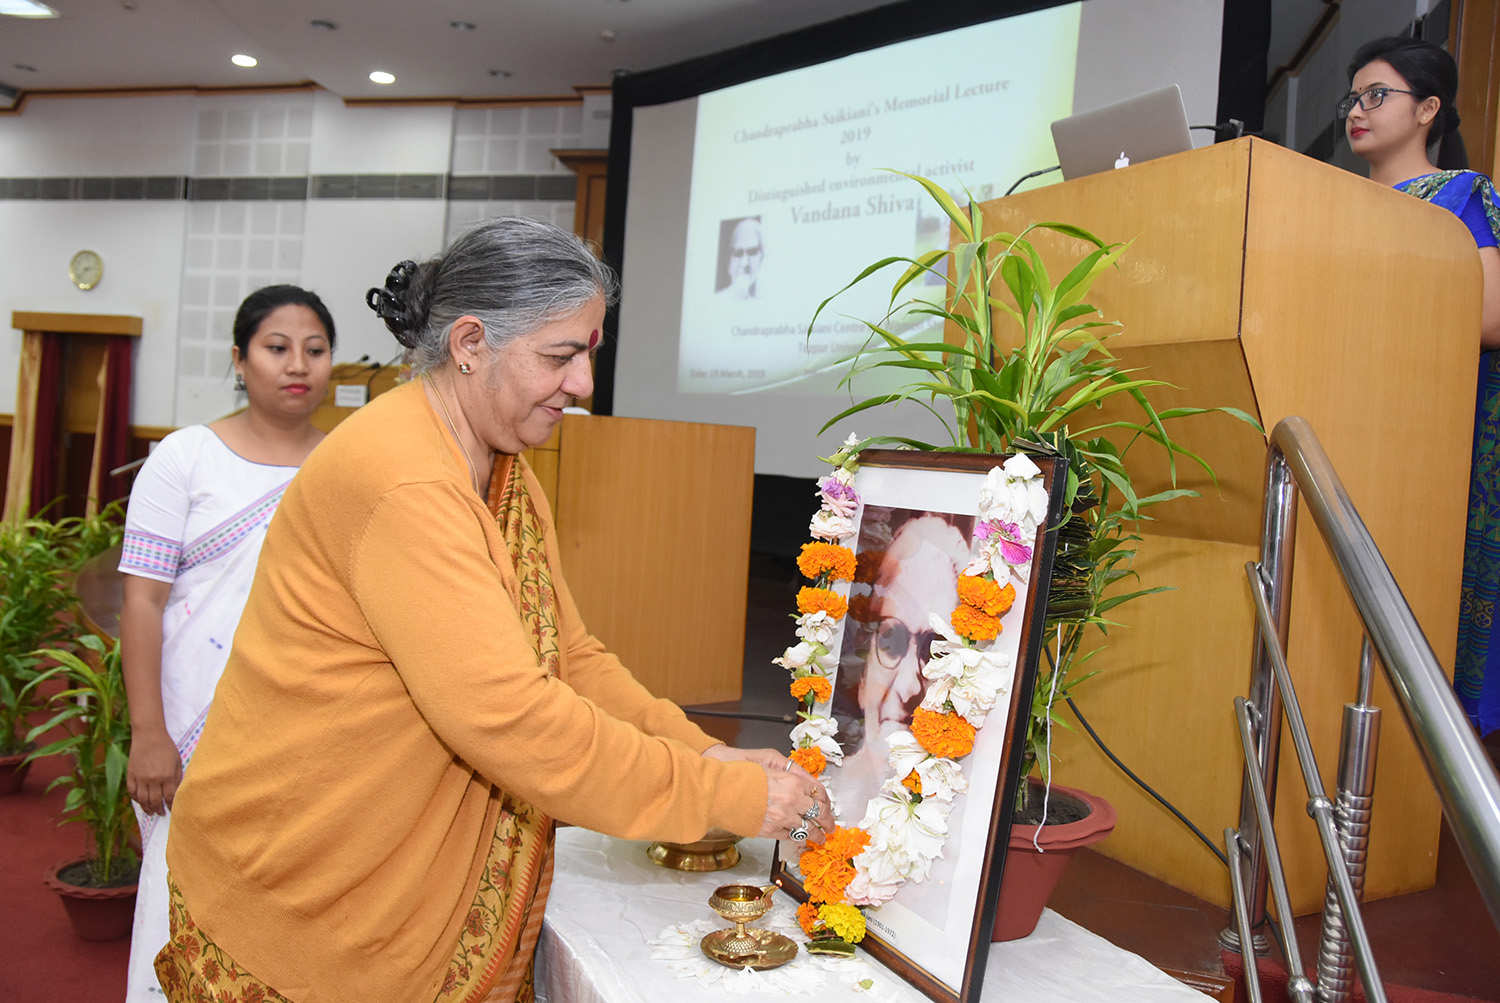 Chandraprabha Saikiani’s memorial lecture by distinguished environmental activist Dr. Vandana Shiva, 19th March, 2019